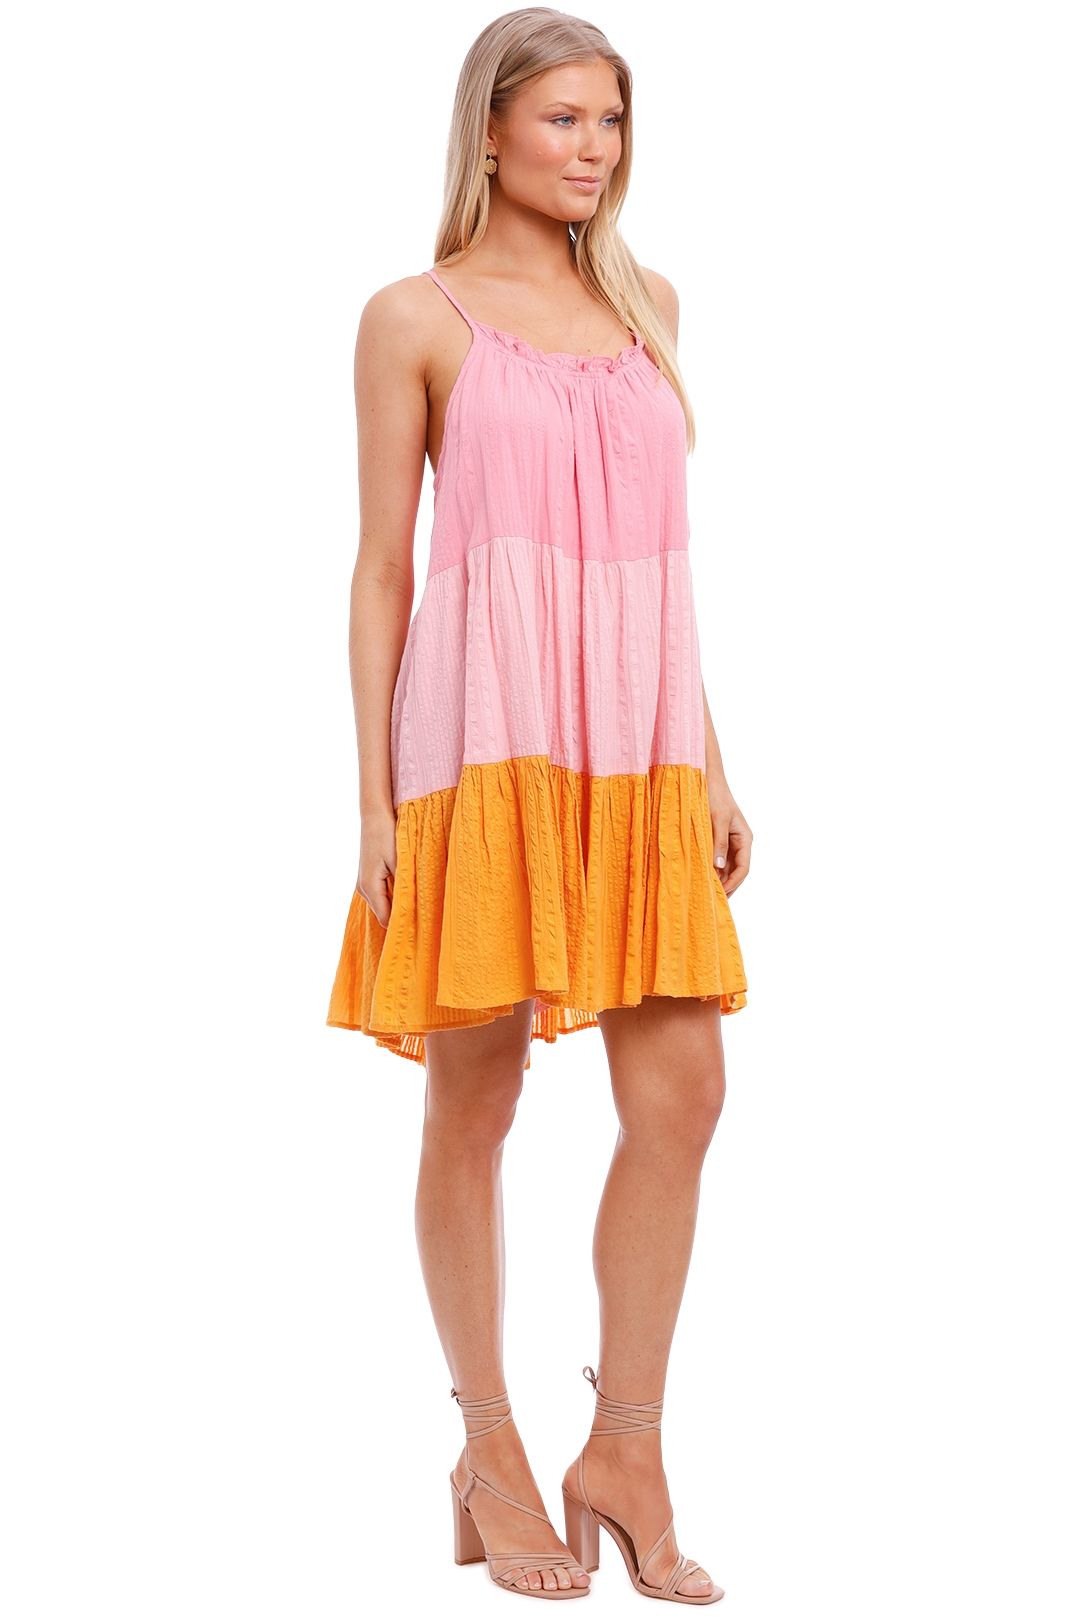 Steele Miami Dress pink orange